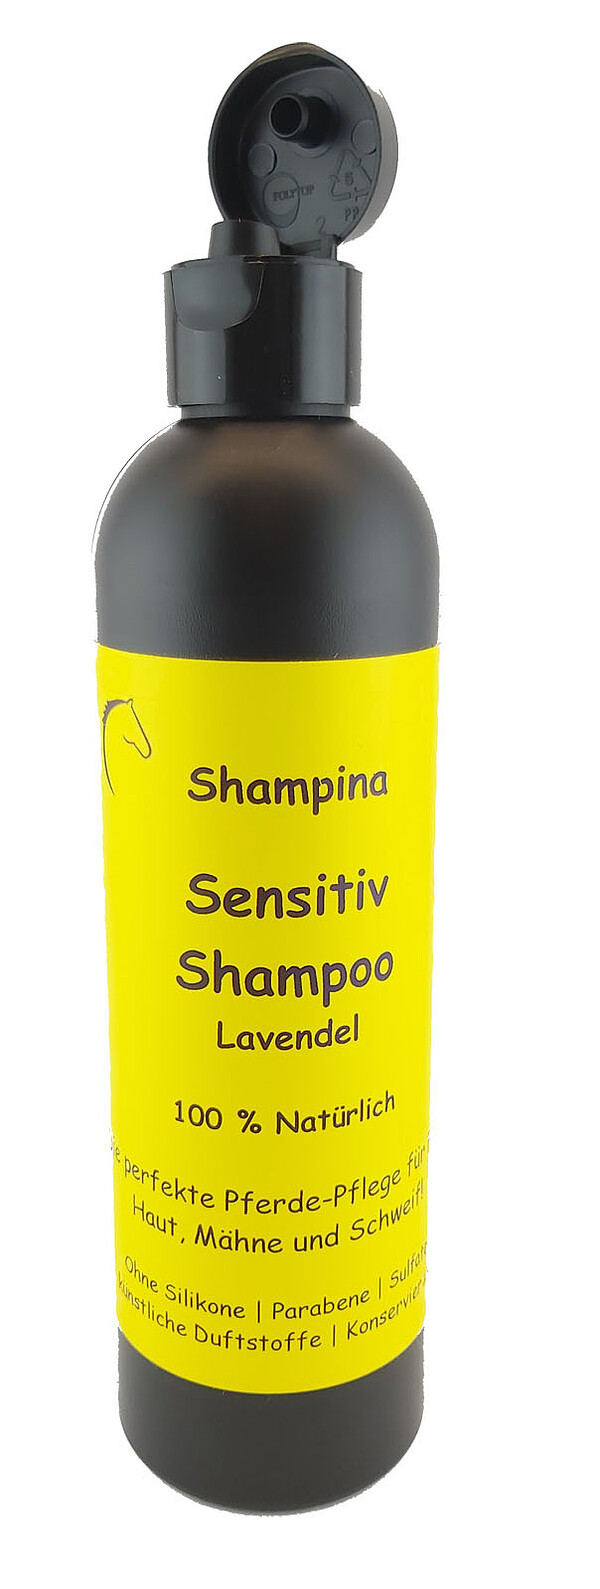 Shampoo sensitive Shampina Lavendel  